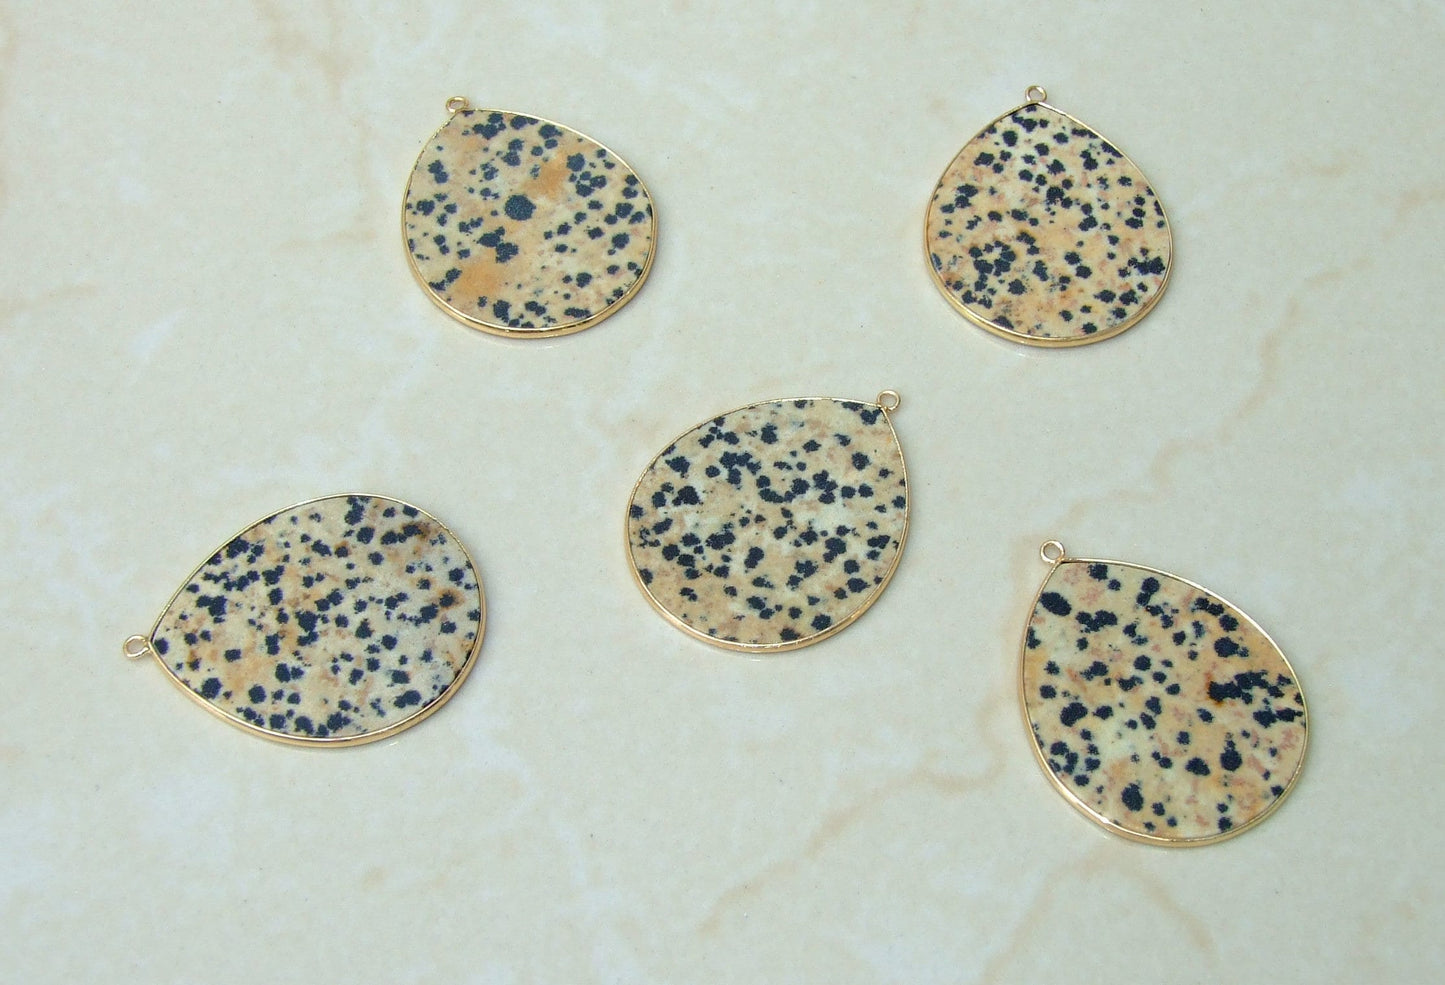 Dalmatian Jasper Pendant, Gemstone Pendant, Slice Pendant, Gold Plated Bezel and Bail, Tear Drop Pendant, Thin and Polished - 32mm x 38mm